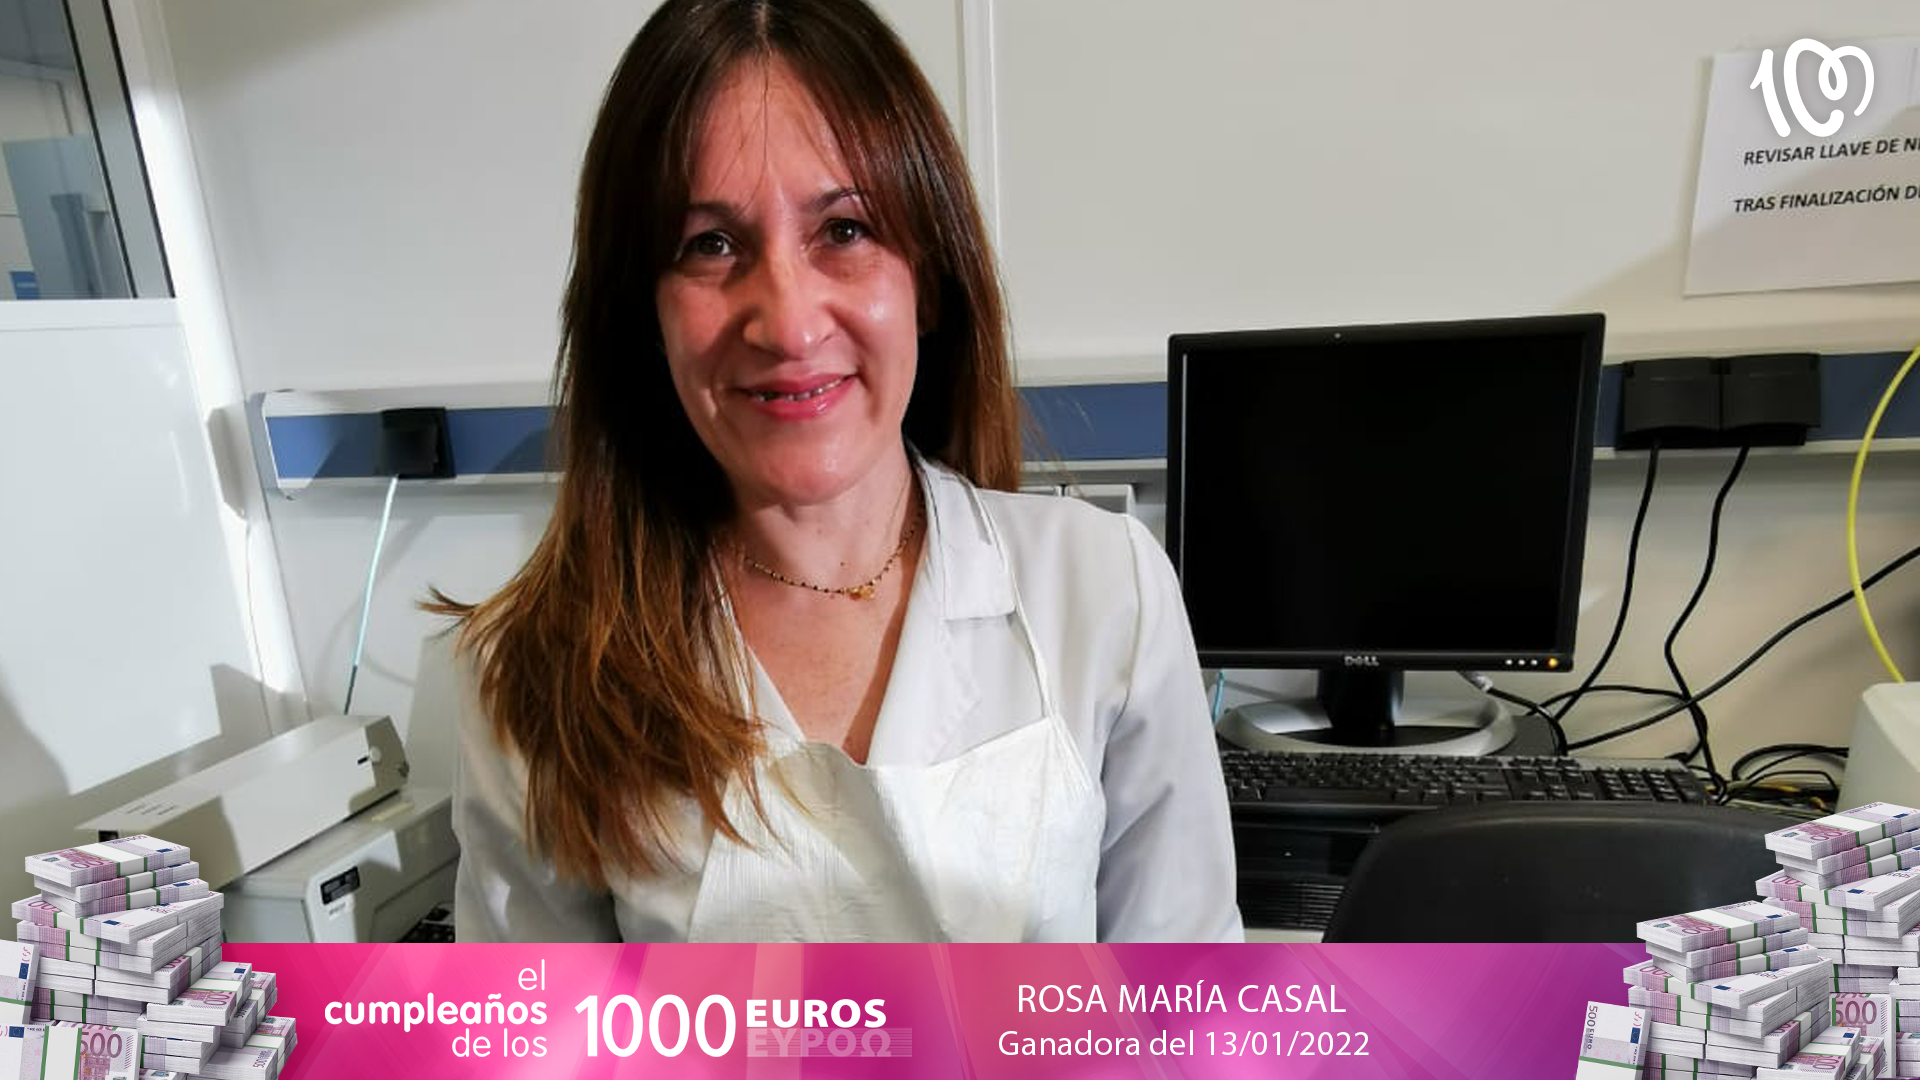 Rosa MªCasal ha ganado 2.000 euros de forma espectacular: "¡Ha sido gracias a mis compañeros!"